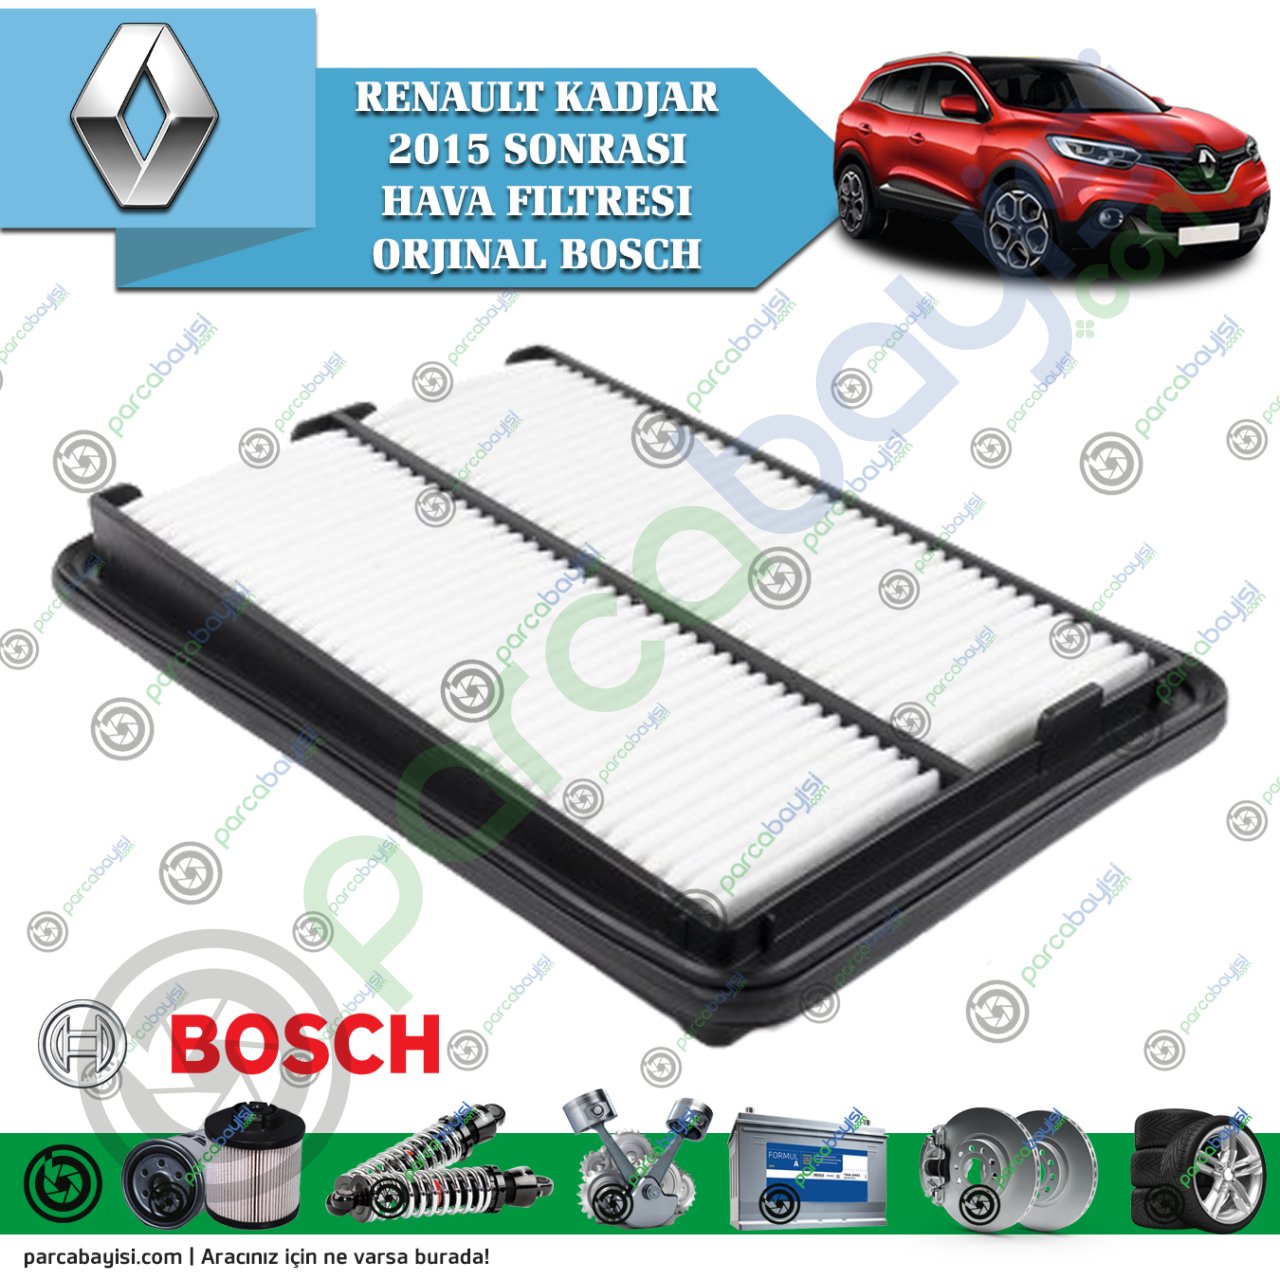 Renault Kadjar Hava Filtresi Orjinal Bosch 165464Ba1A-165464Ea0C